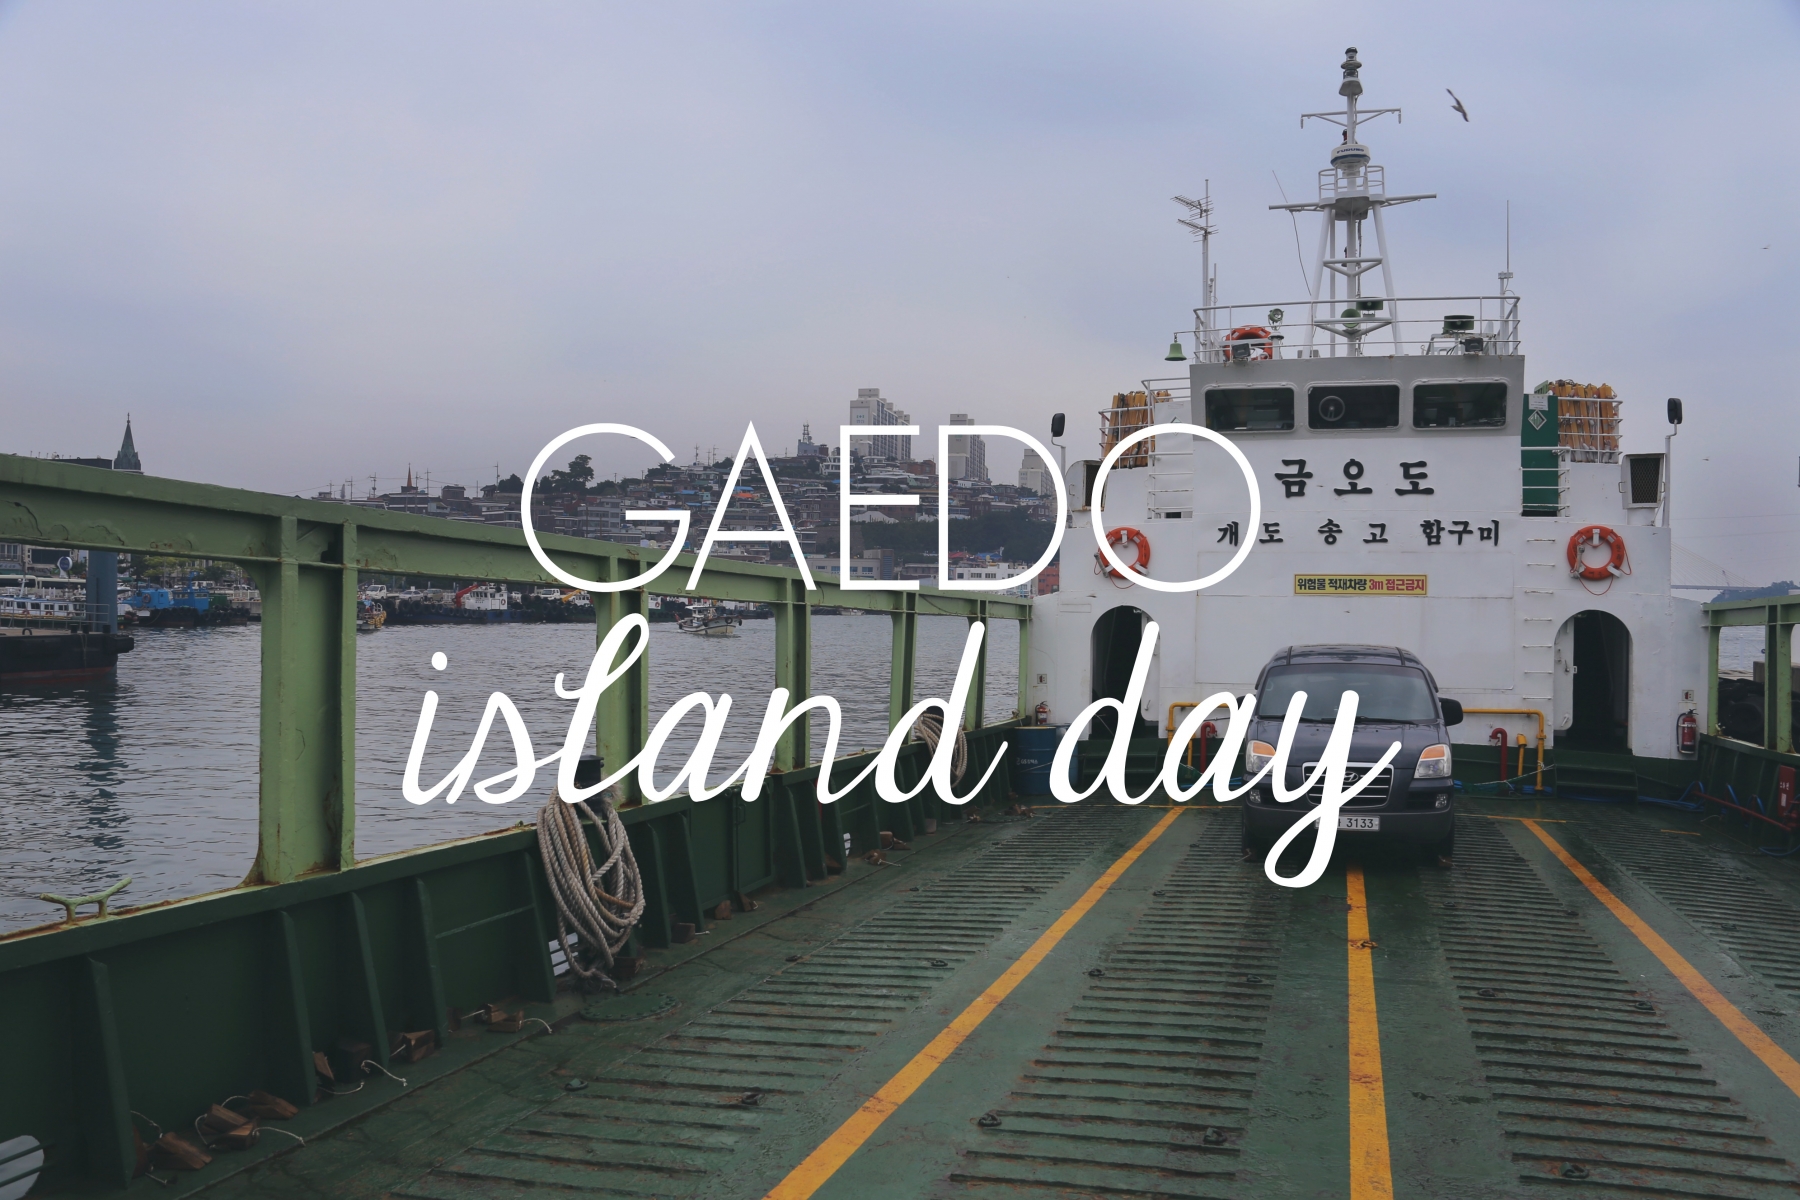 Gaedo Island Day // KOREA